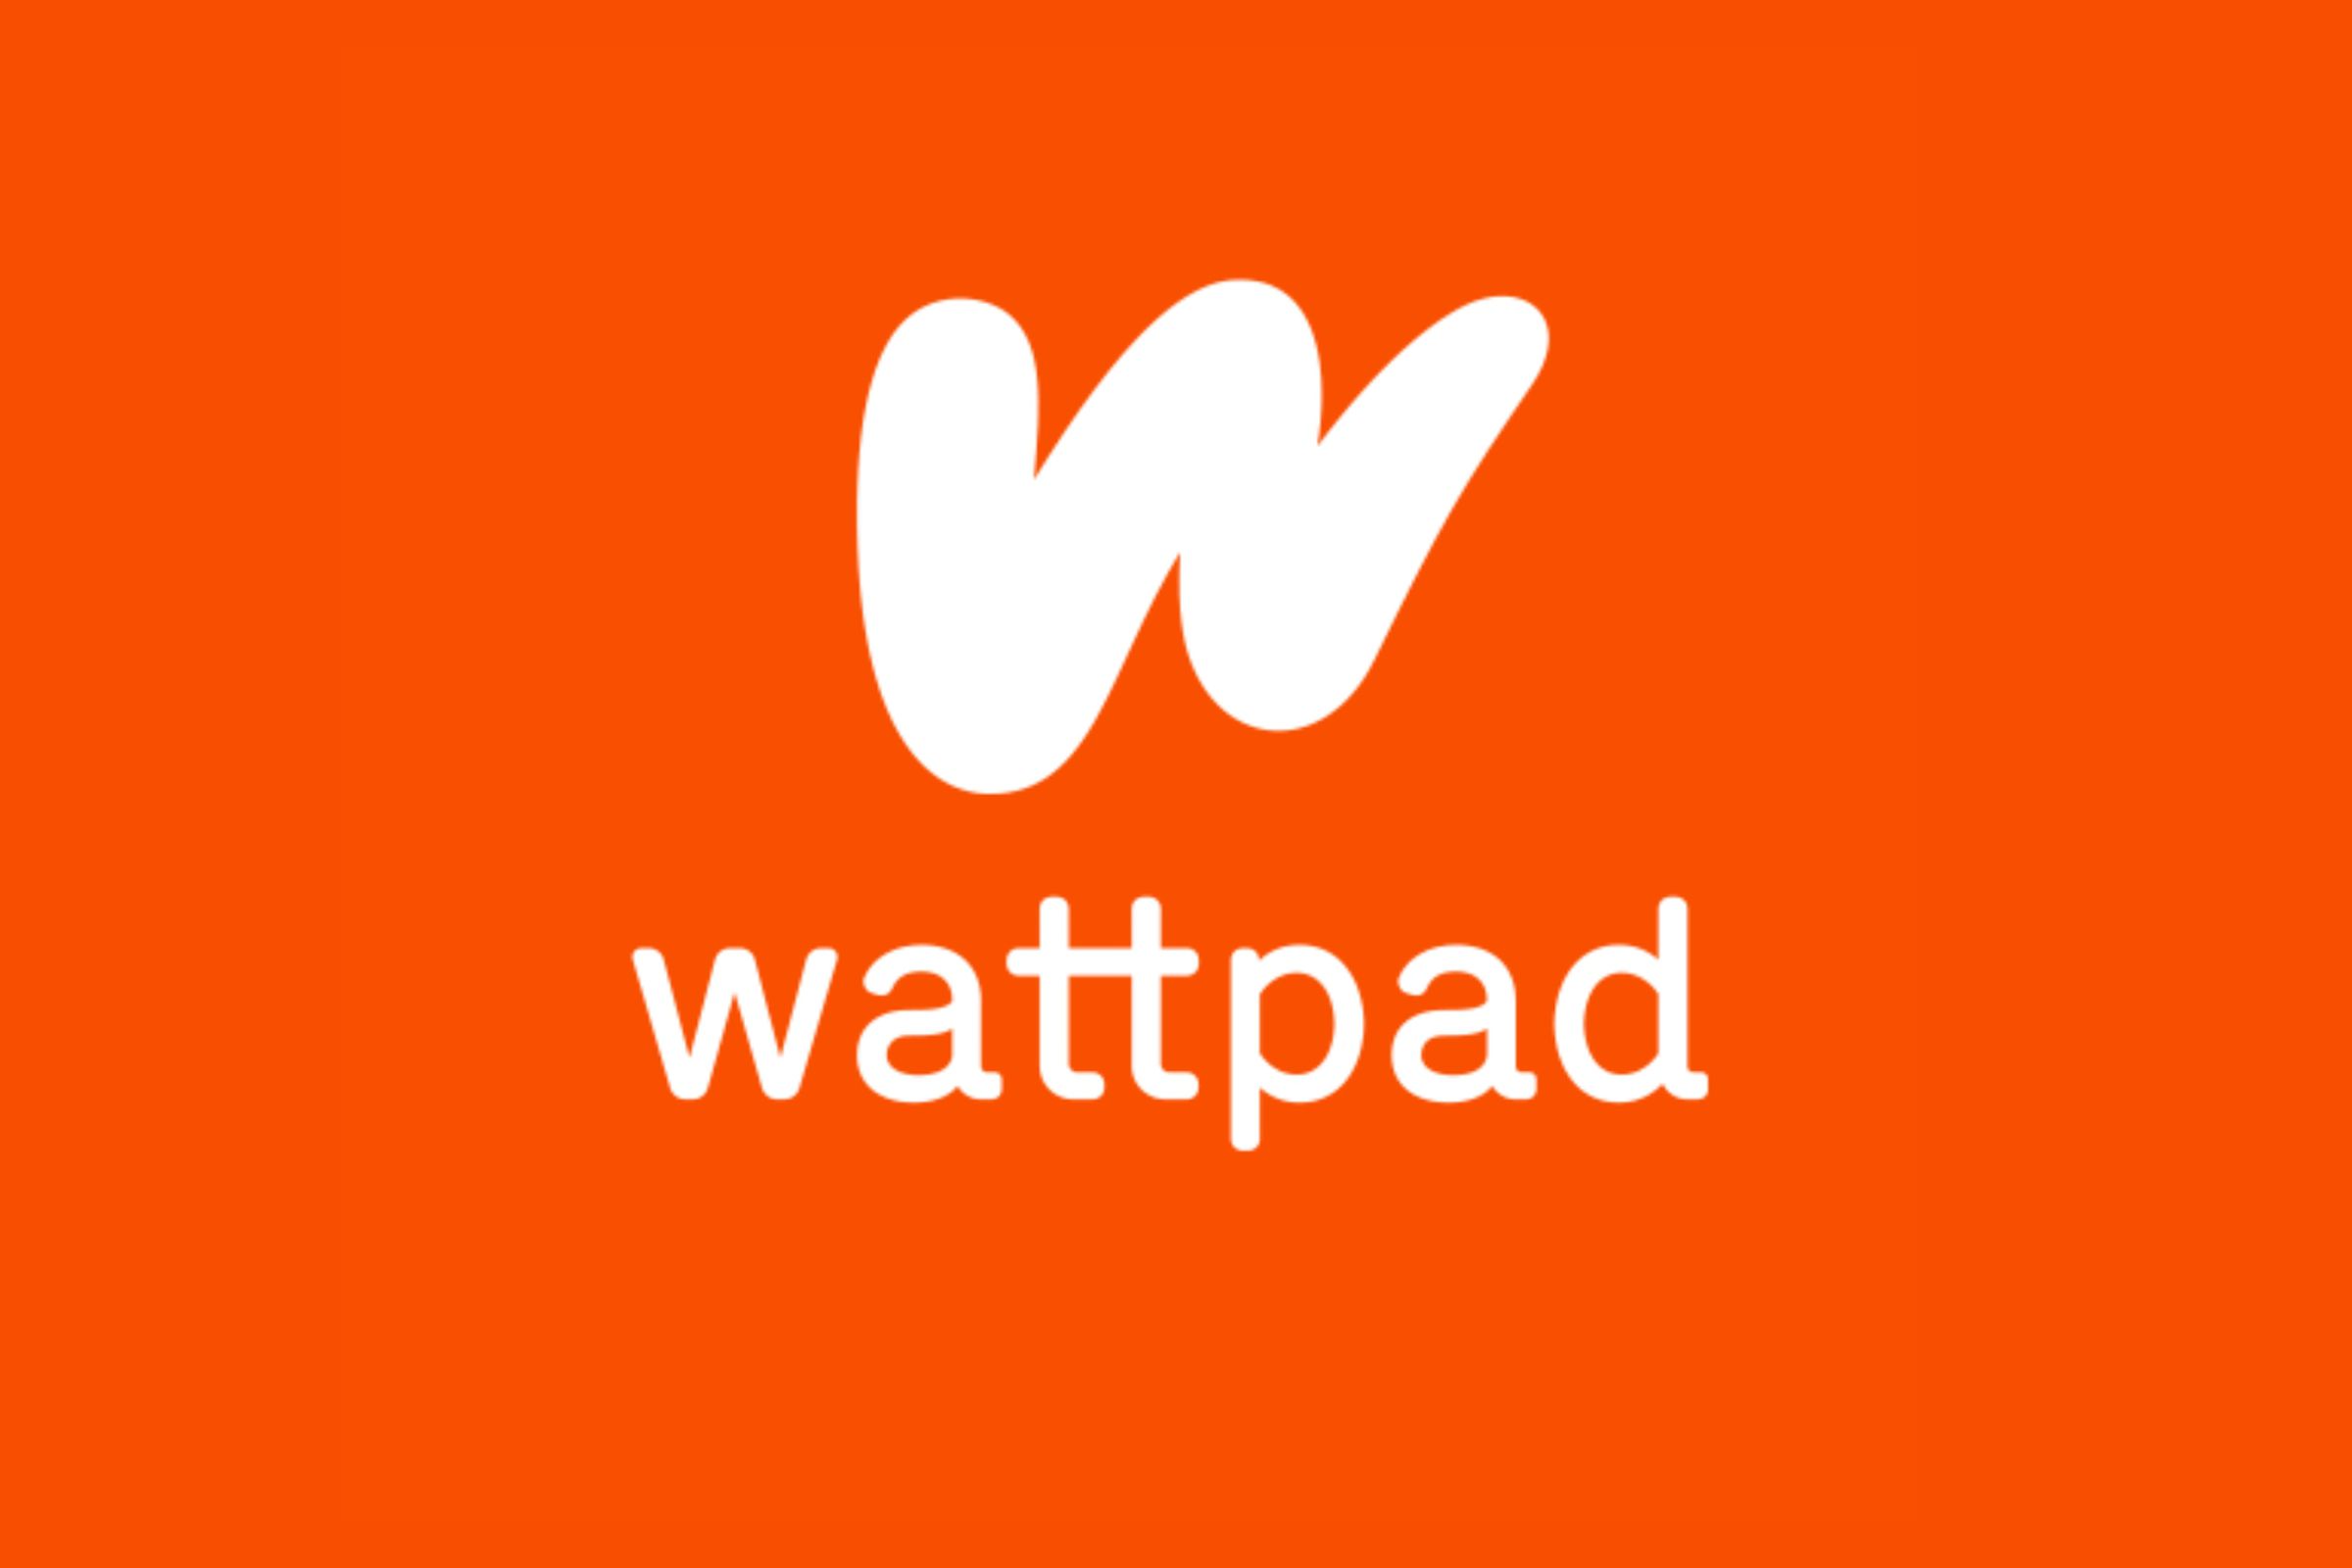 The Wattpad logo in white against an orange background.